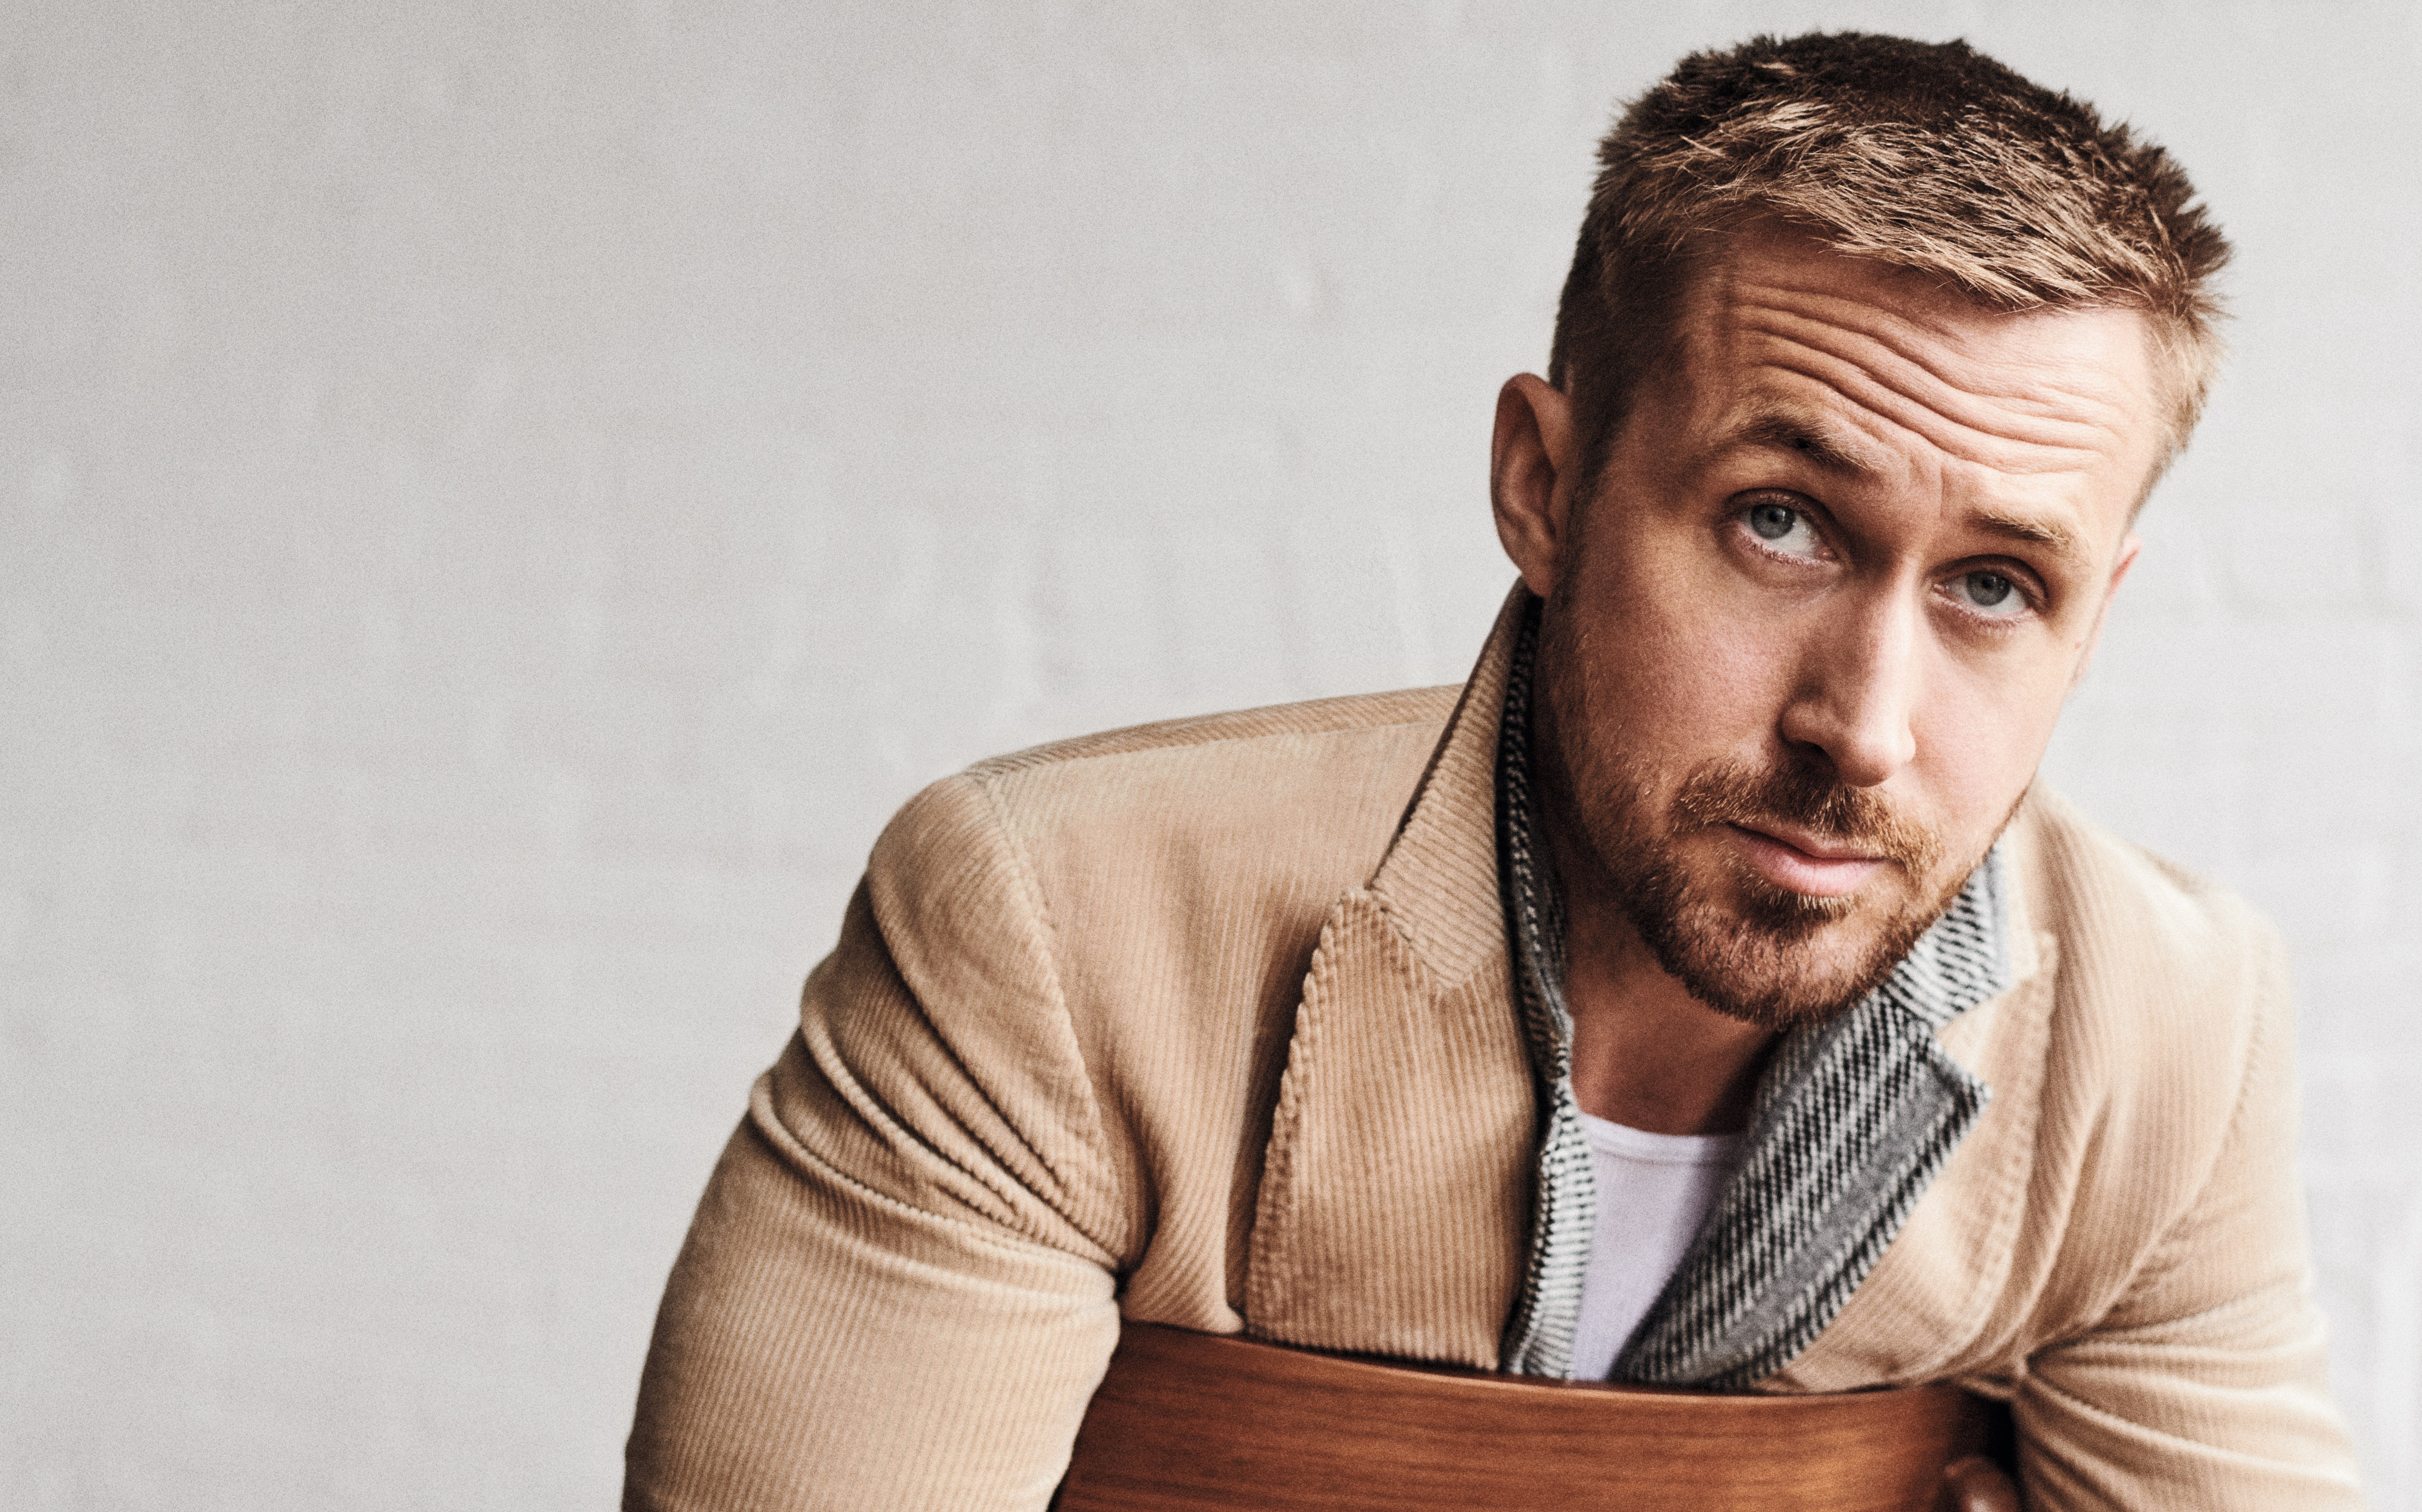 Ryan Gosling GQ 2018 8K, HD Celebrities, 4k Wallpapers, Images